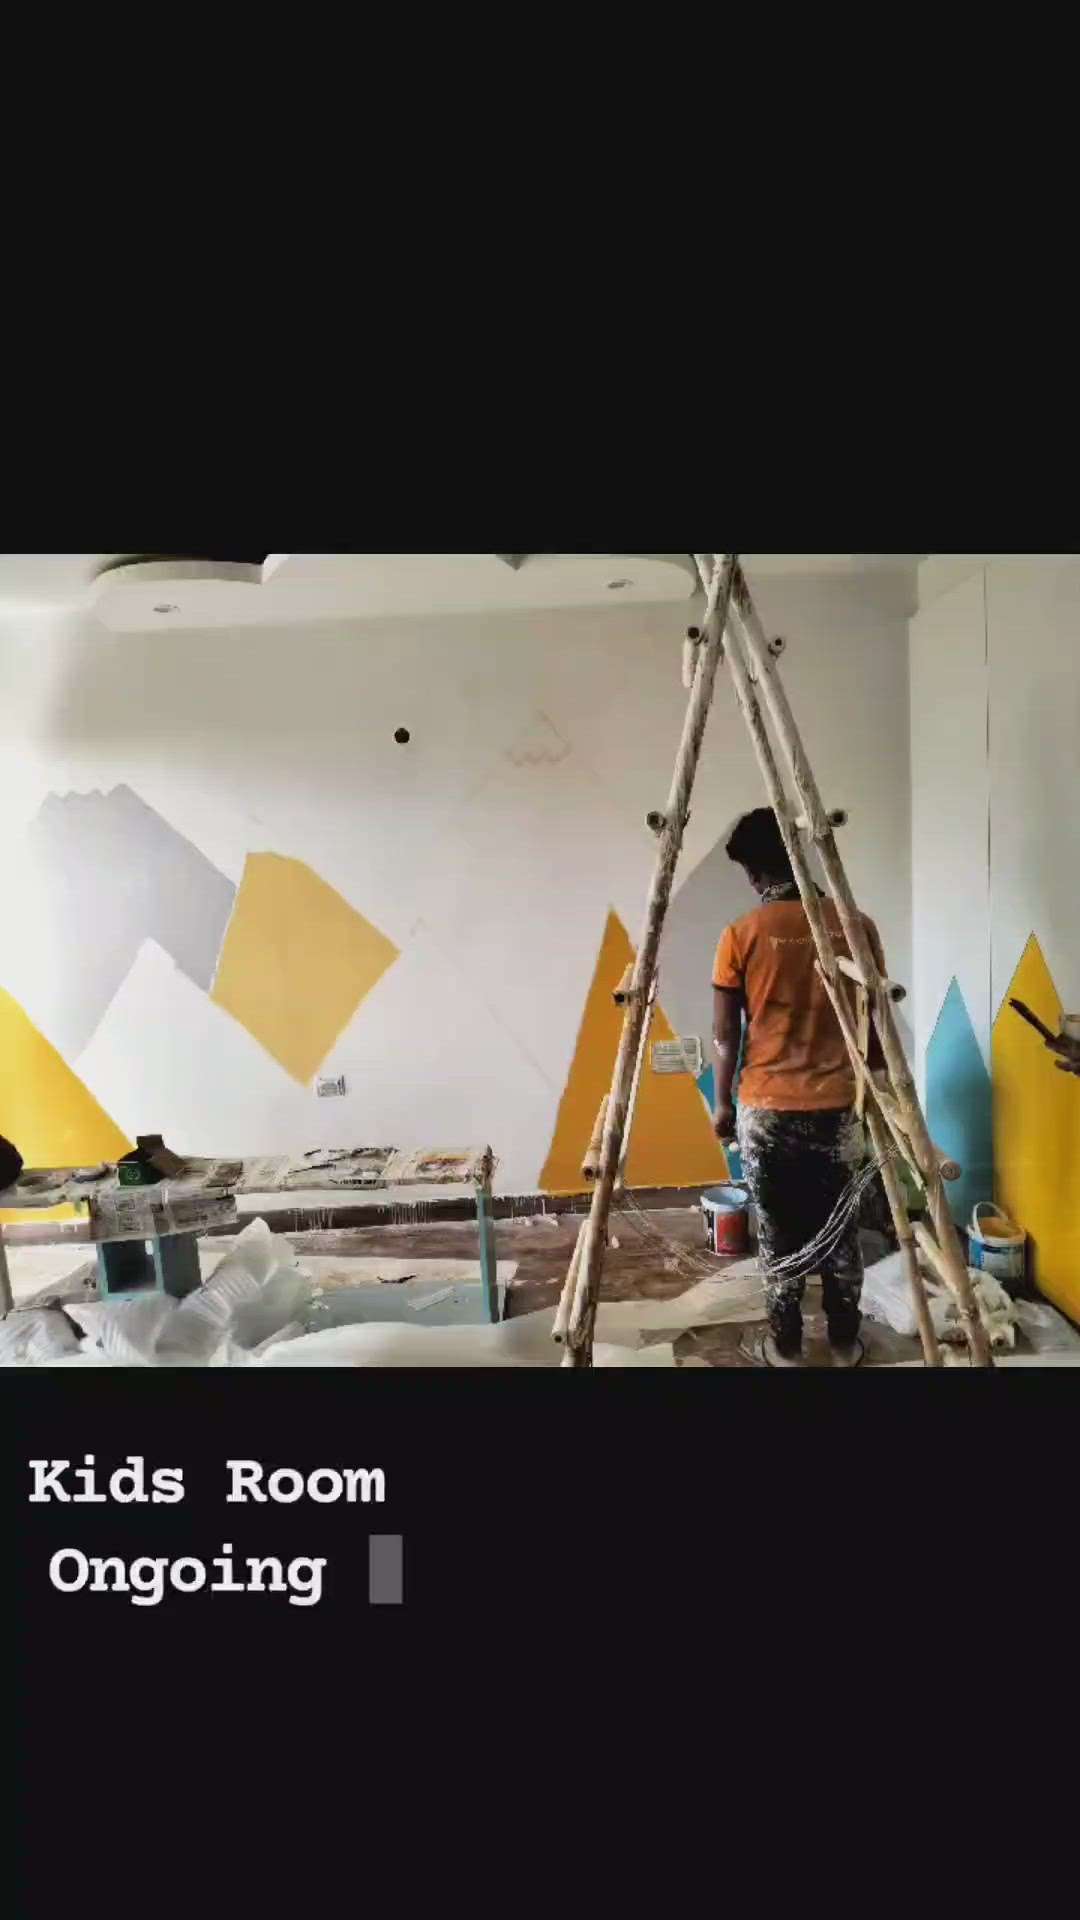 #KidsRoom #Kids_shop_interiors #kids #kidsroomdesign #kidsroombed #kidsstudytable #InteriorDesigner #BedroomDecor #cielingdesign